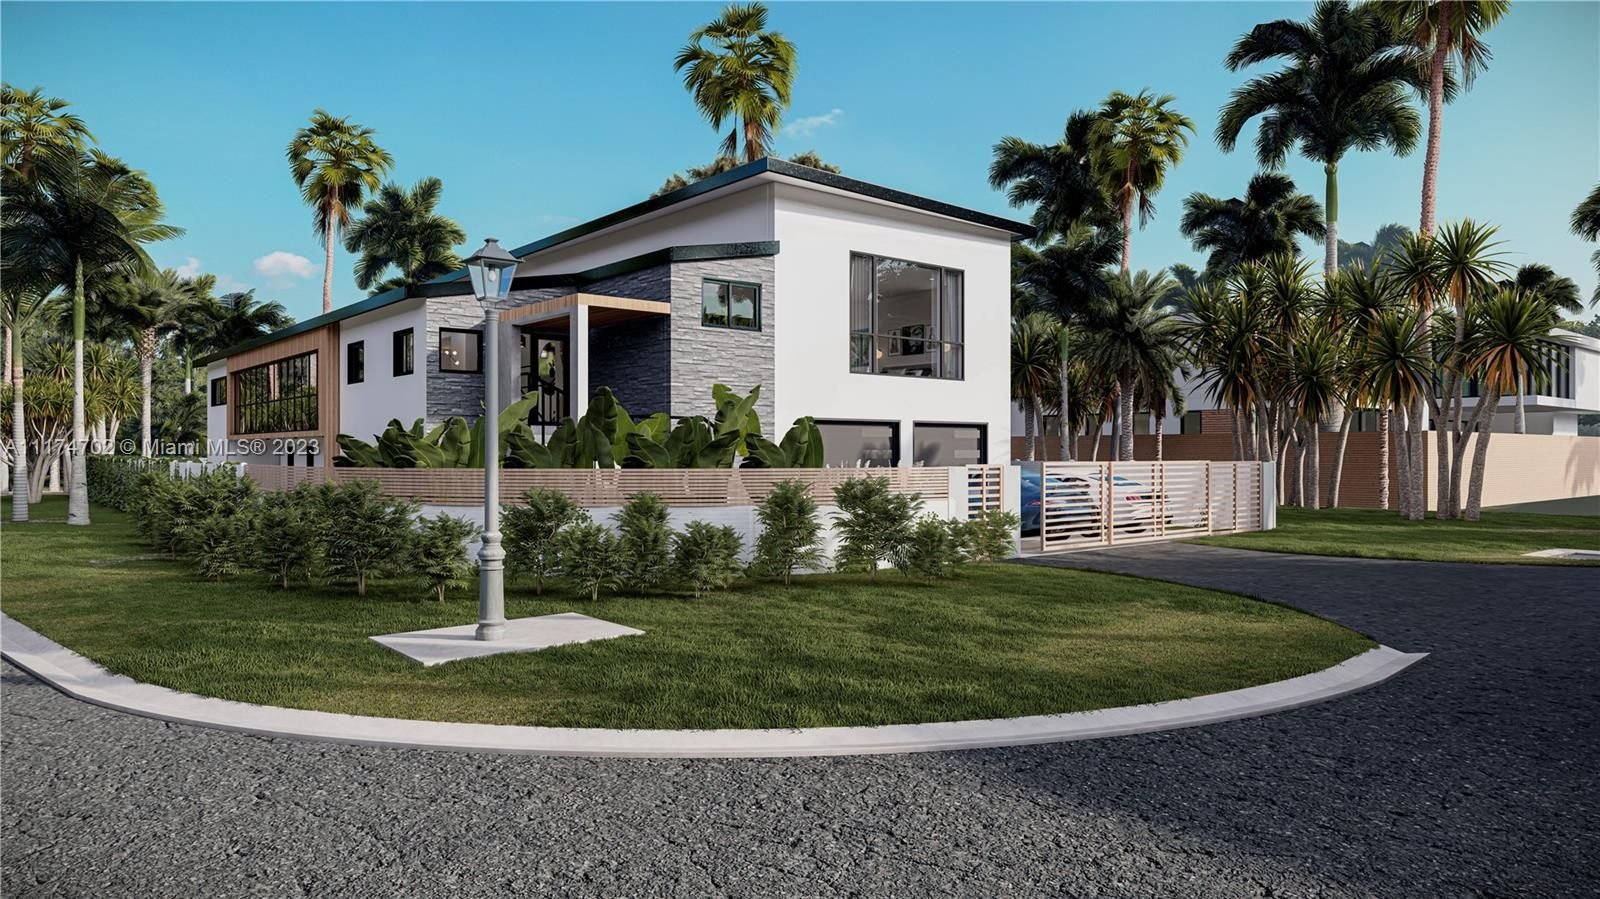 Real estate property located at 1351 Venetian Way, Miami-Dade County, Miami, FL